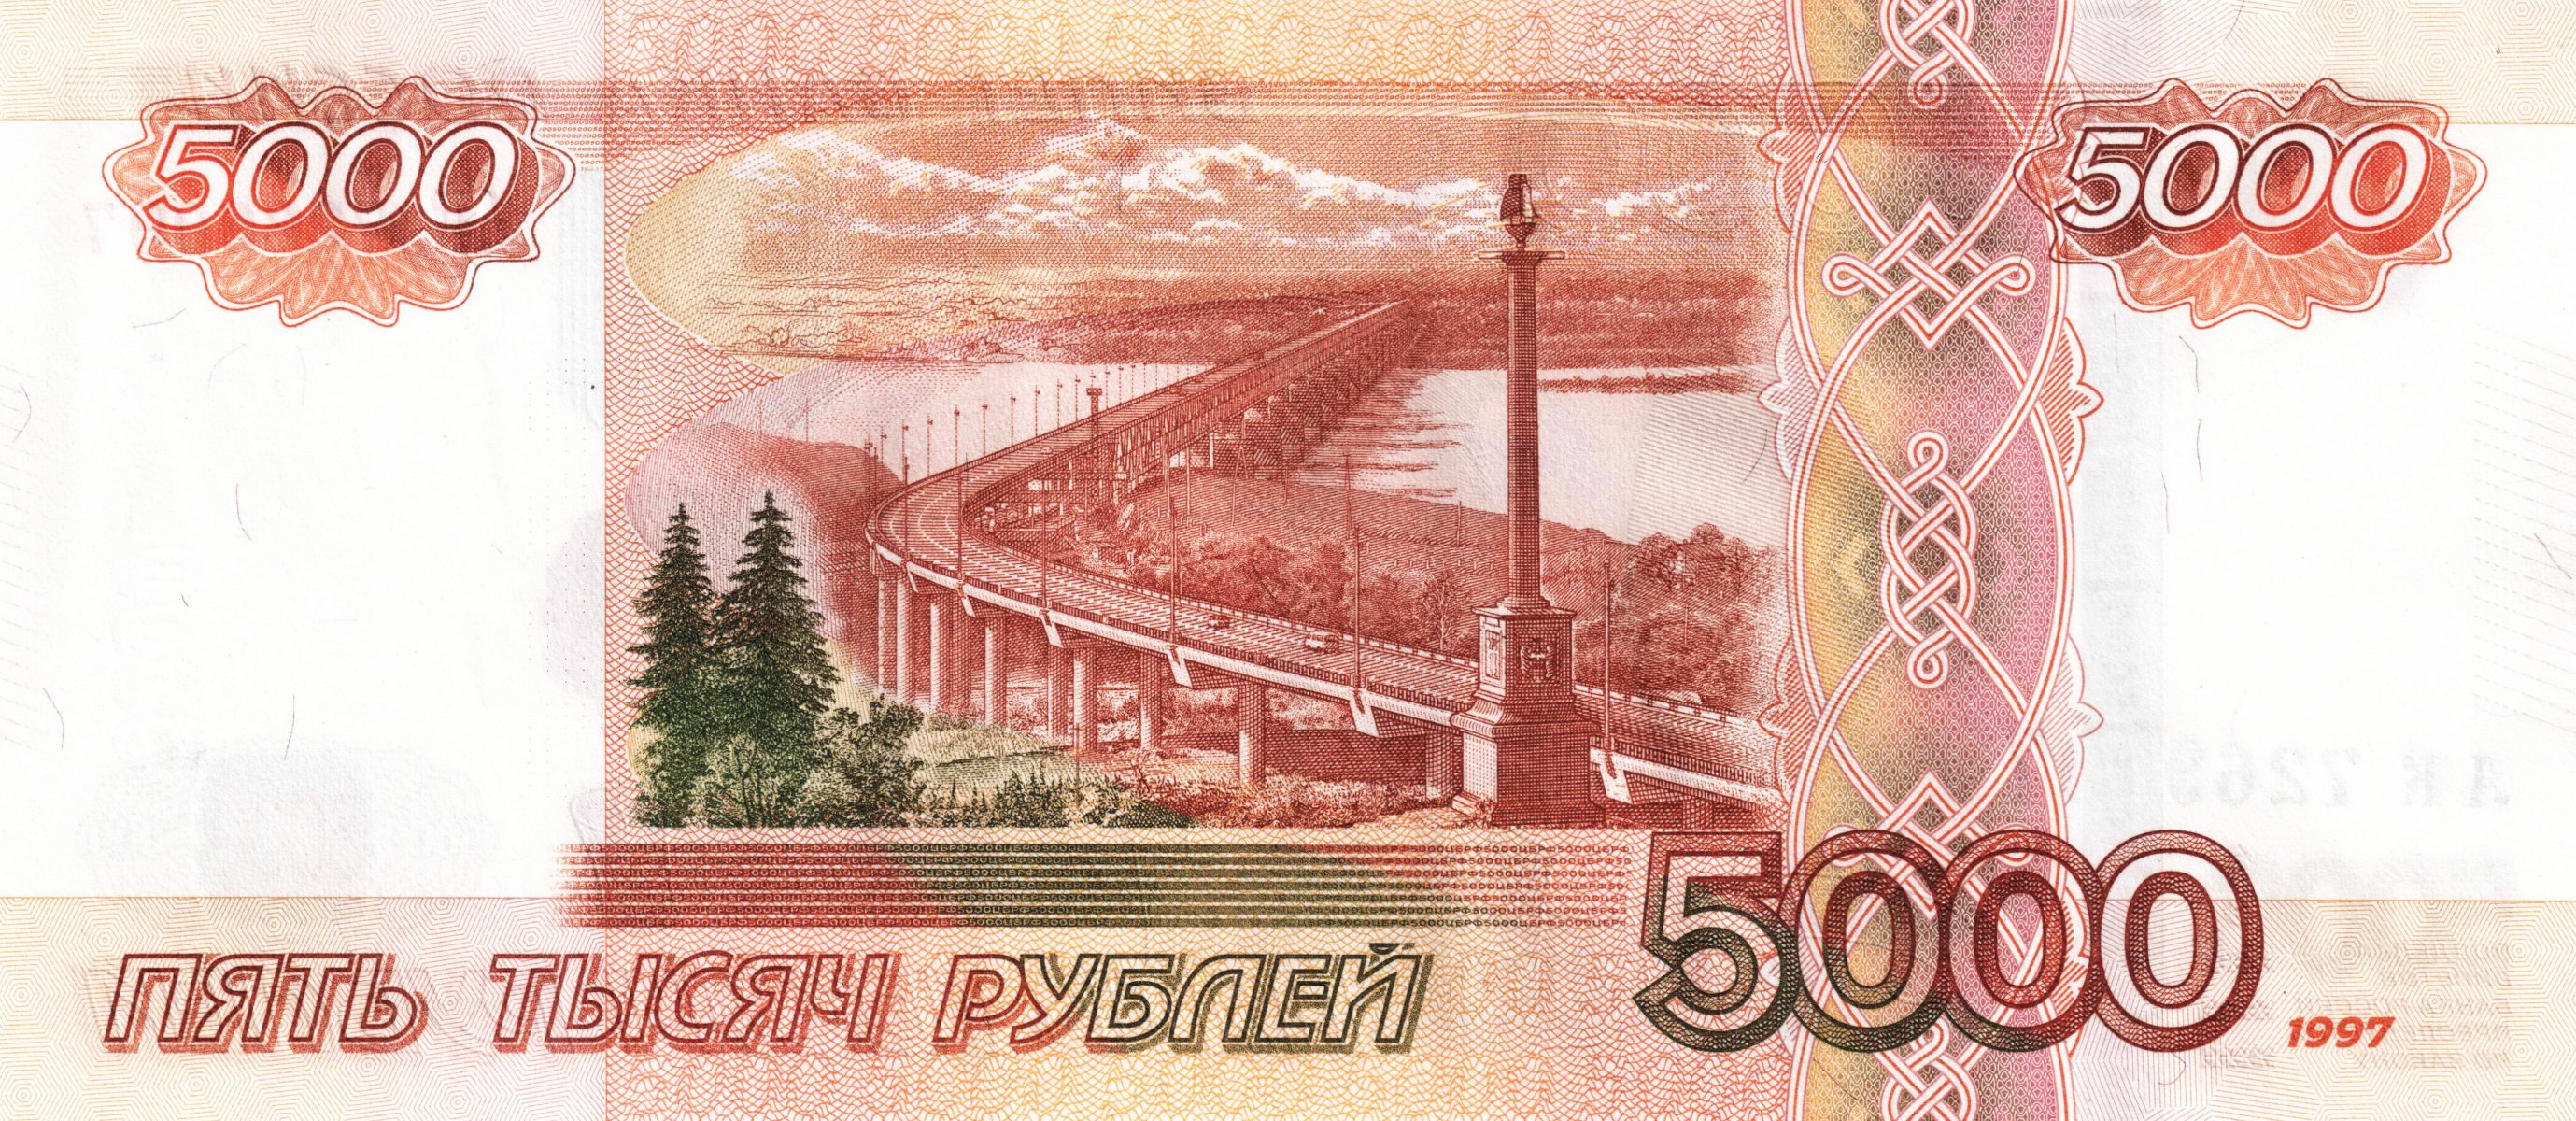 Купюра 50 Рублей Фото